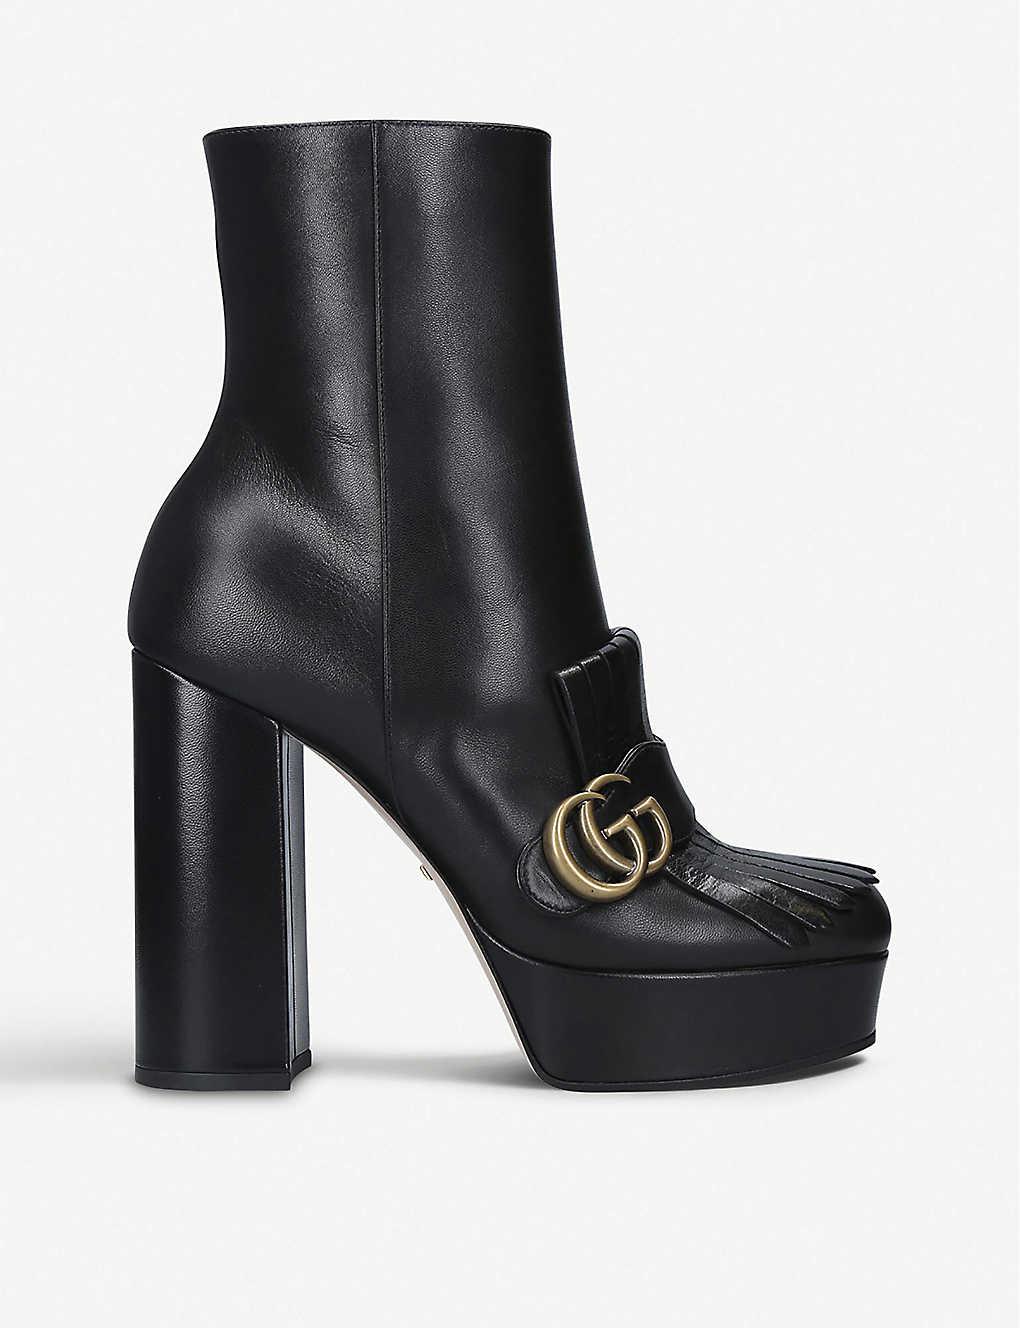 Gucci Fringe Leather Platform Boot in Black | Lyst